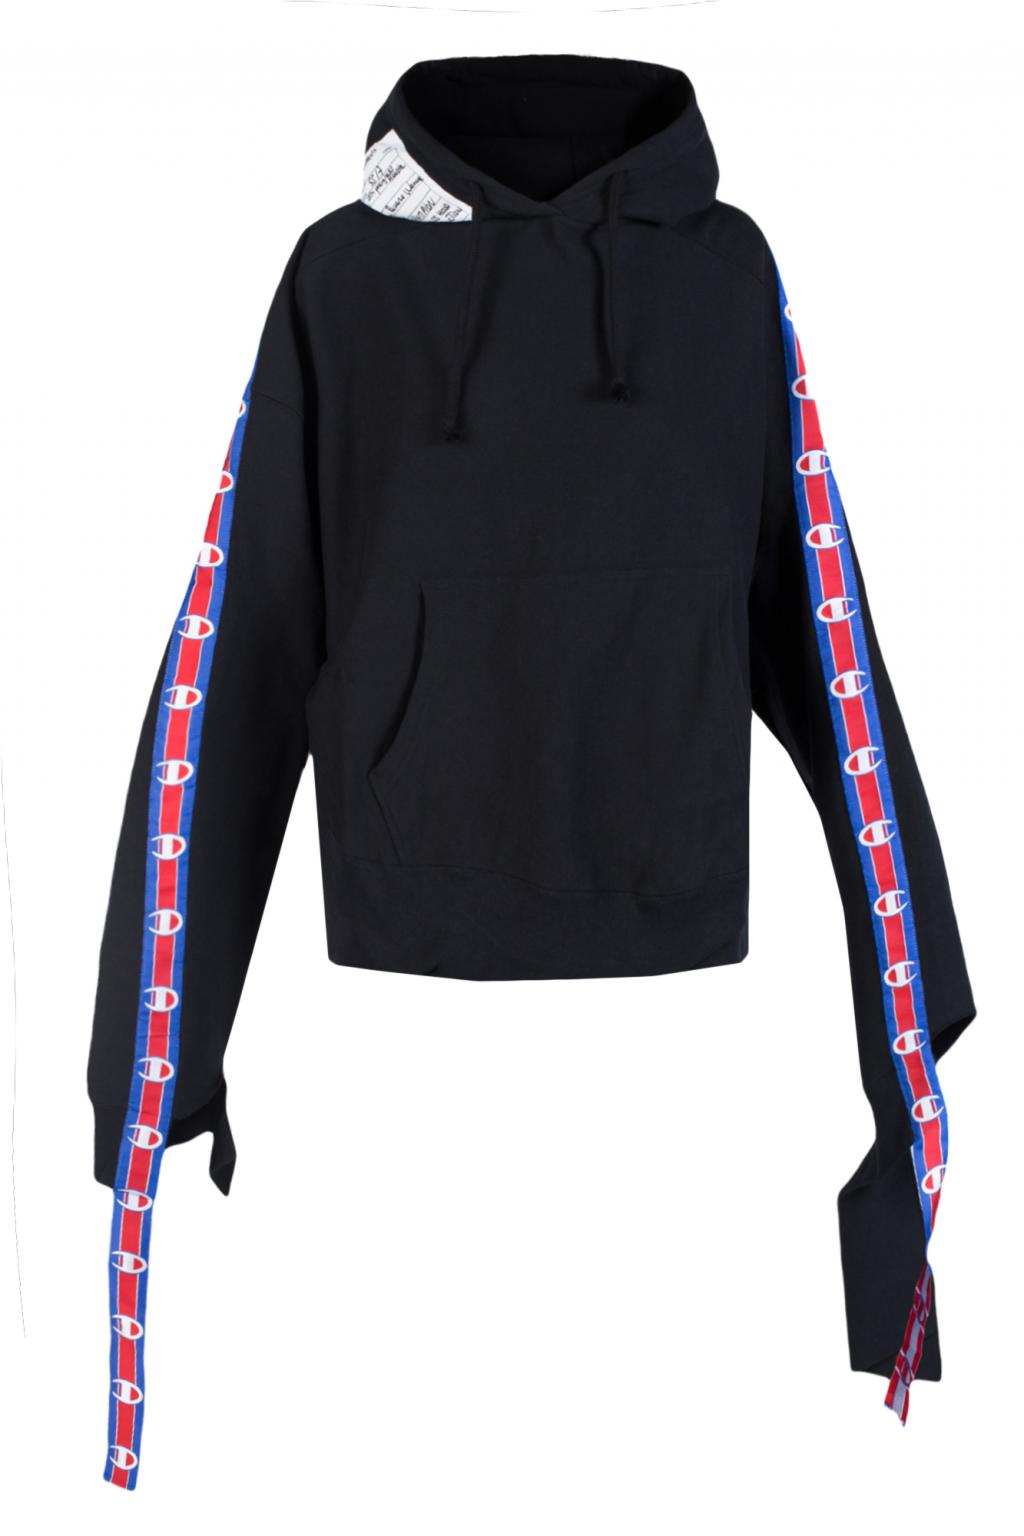 Black Hooded sweatshirt Vetements x Champion VETEMENTS - Vitkac Canada